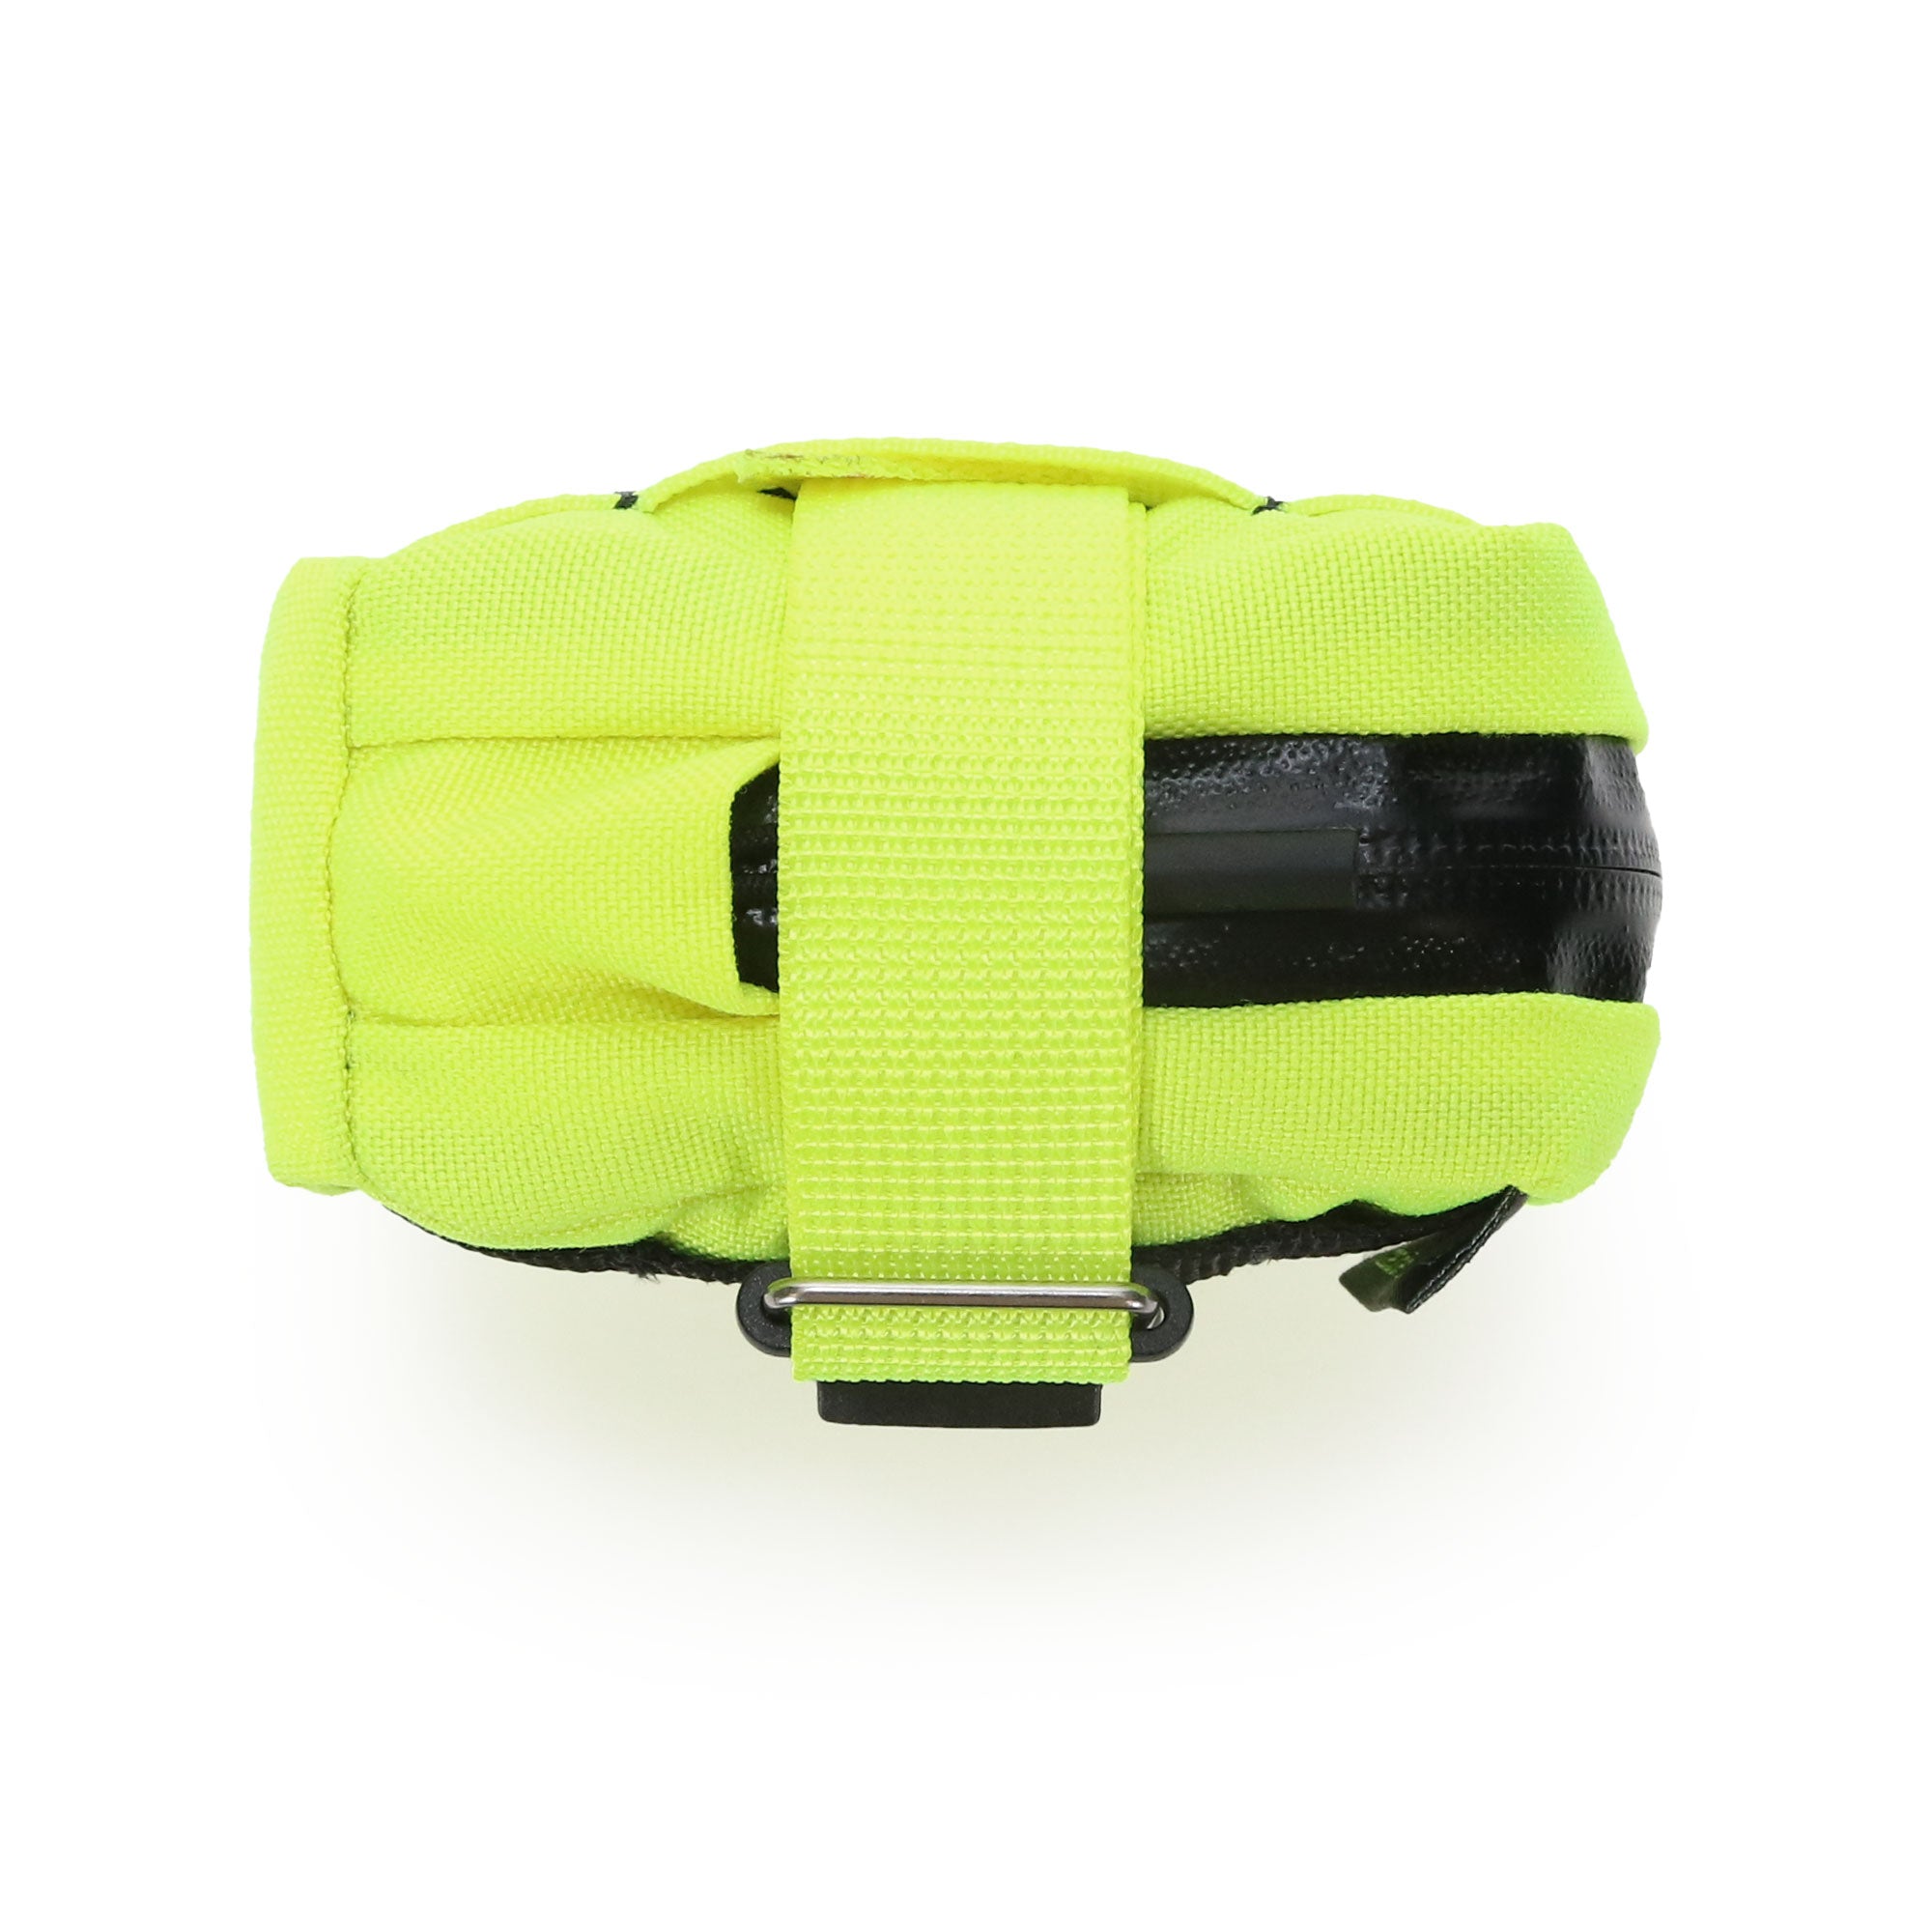 Plan B saddle bag Neon Yellow - Carry a spare tube, CO2 cartridge